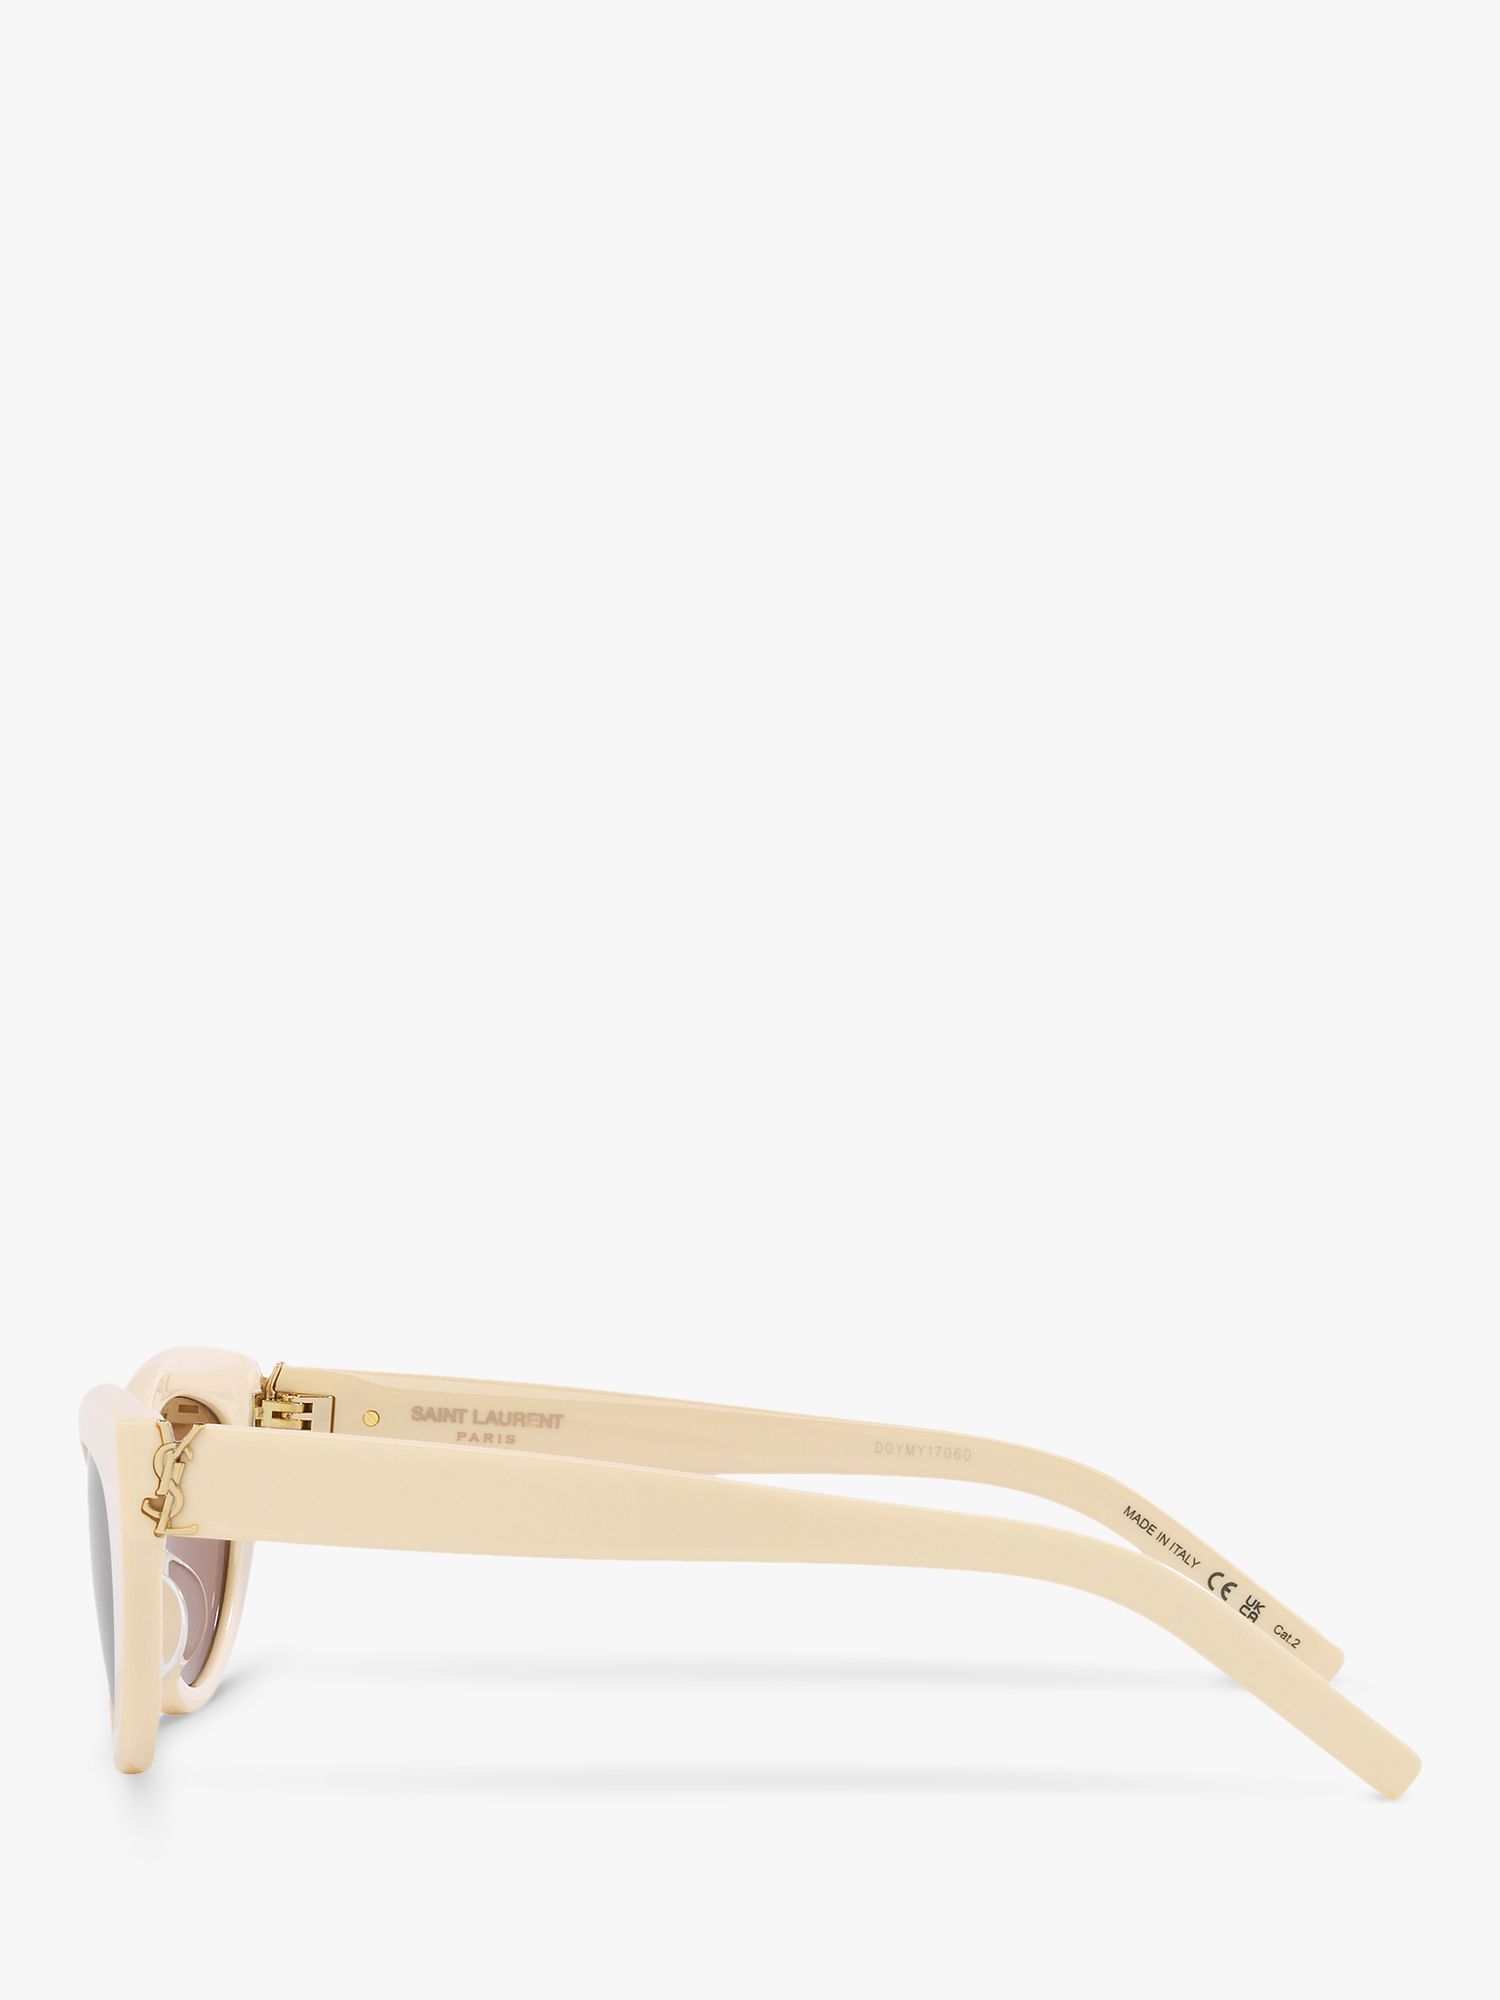 Yves Saint Laurent YS000478 Women's Oval Sunglasses, Ivory/Brown